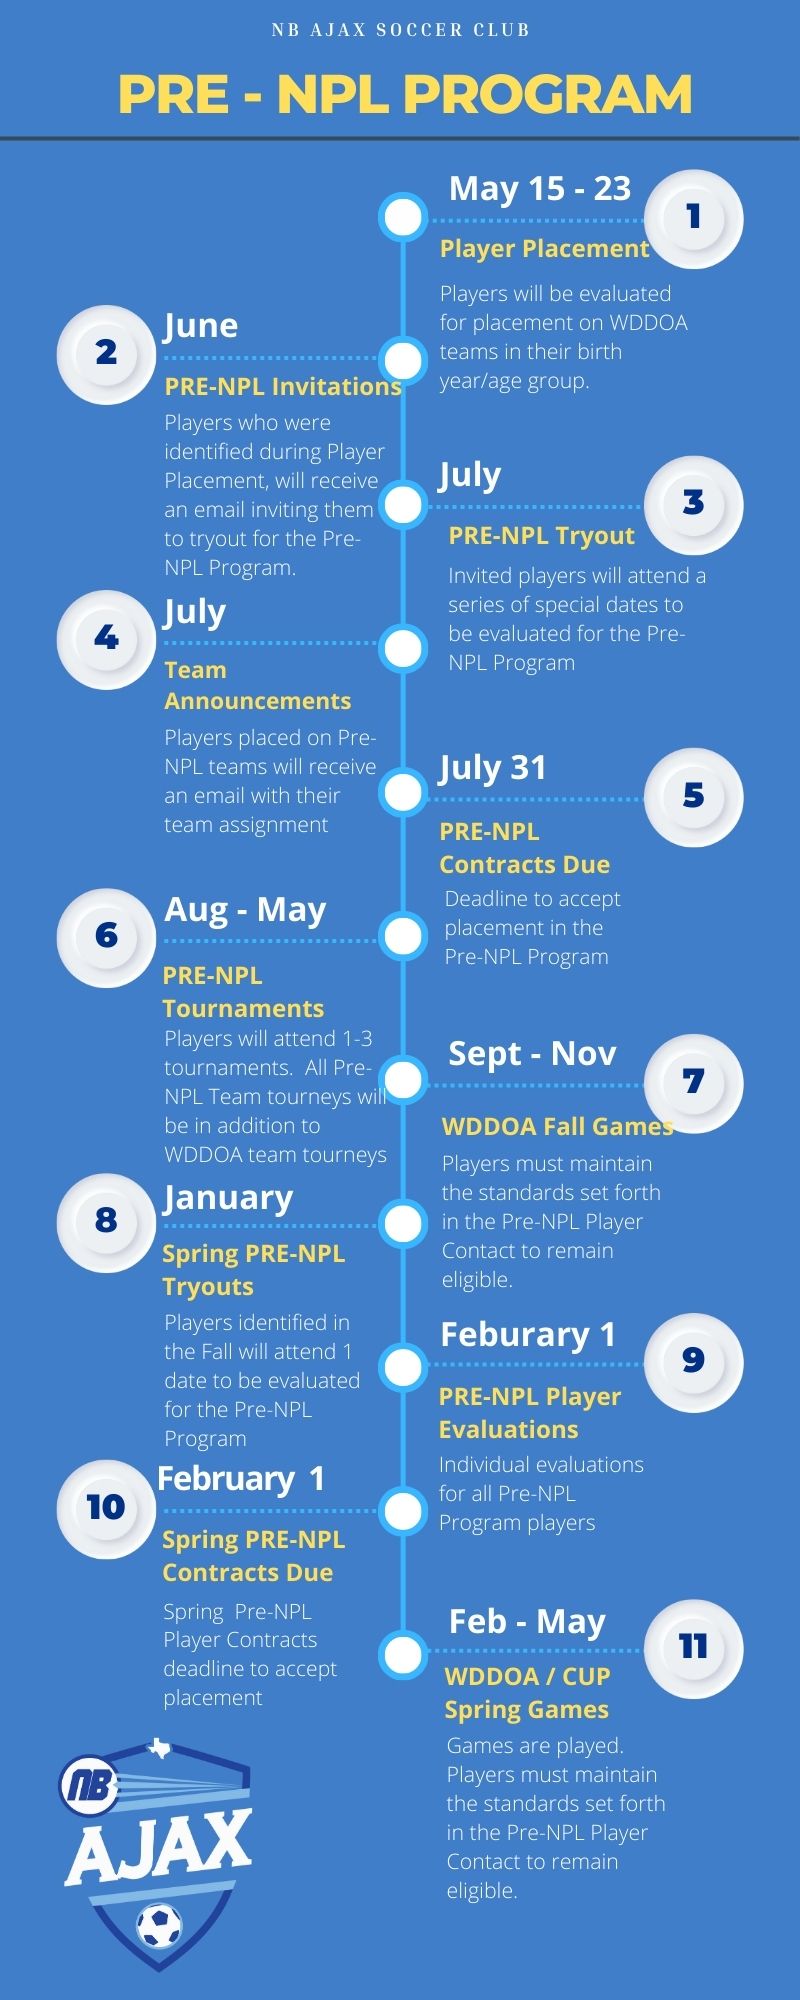 Pre-NPL Program Timeline